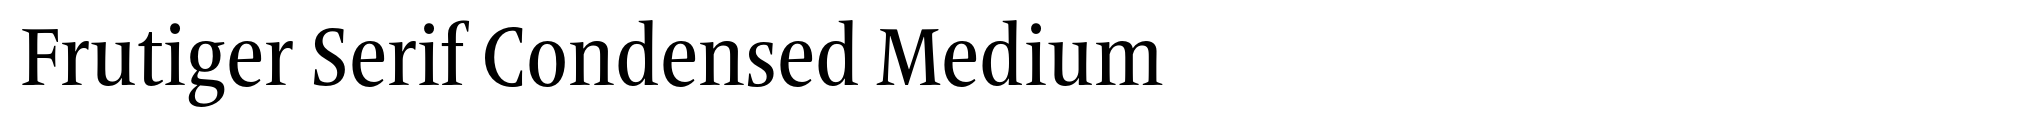 Frutiger Serif Condensed Medium image